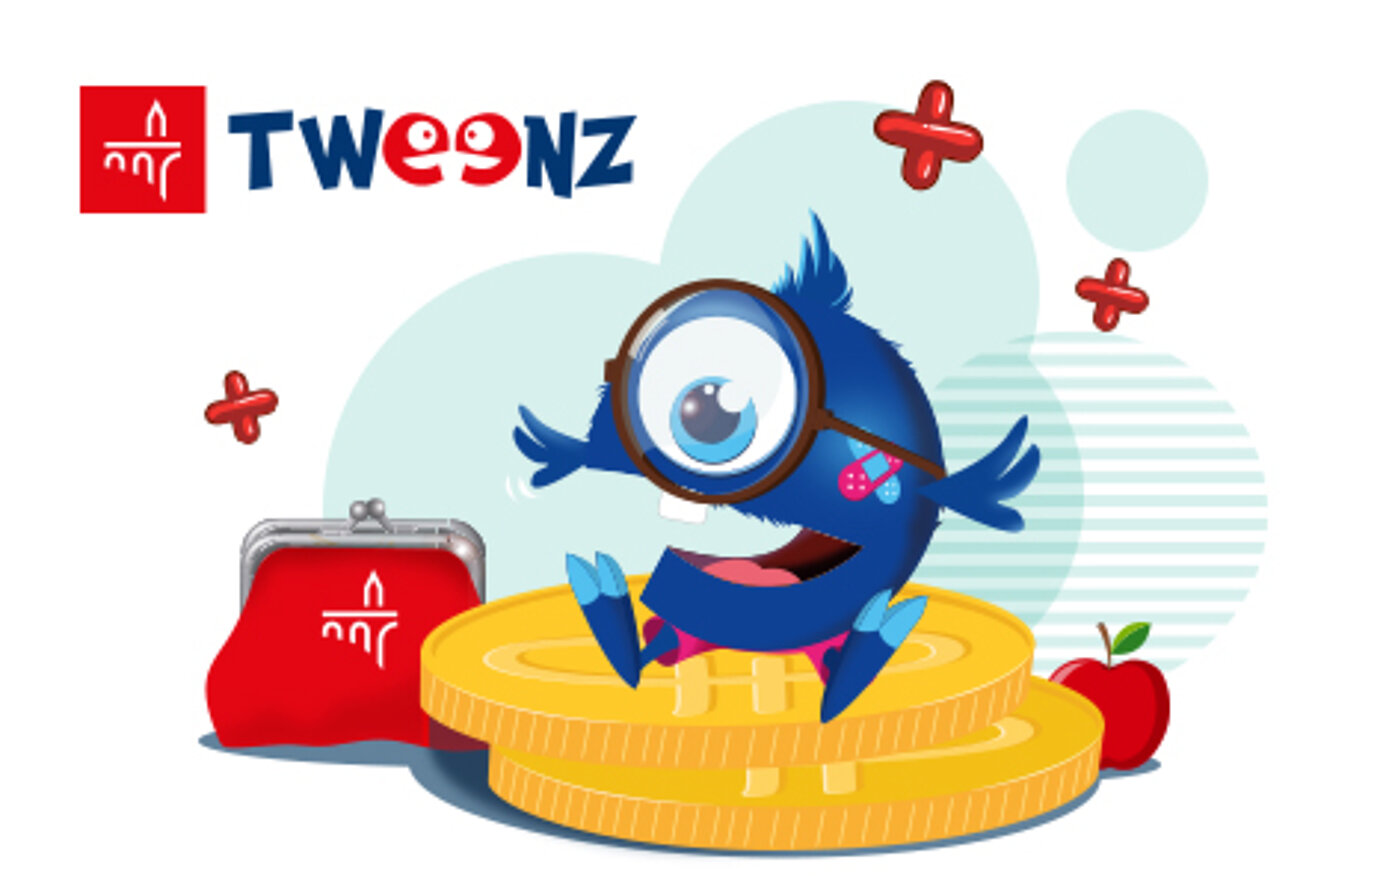 The Tweenz savings account